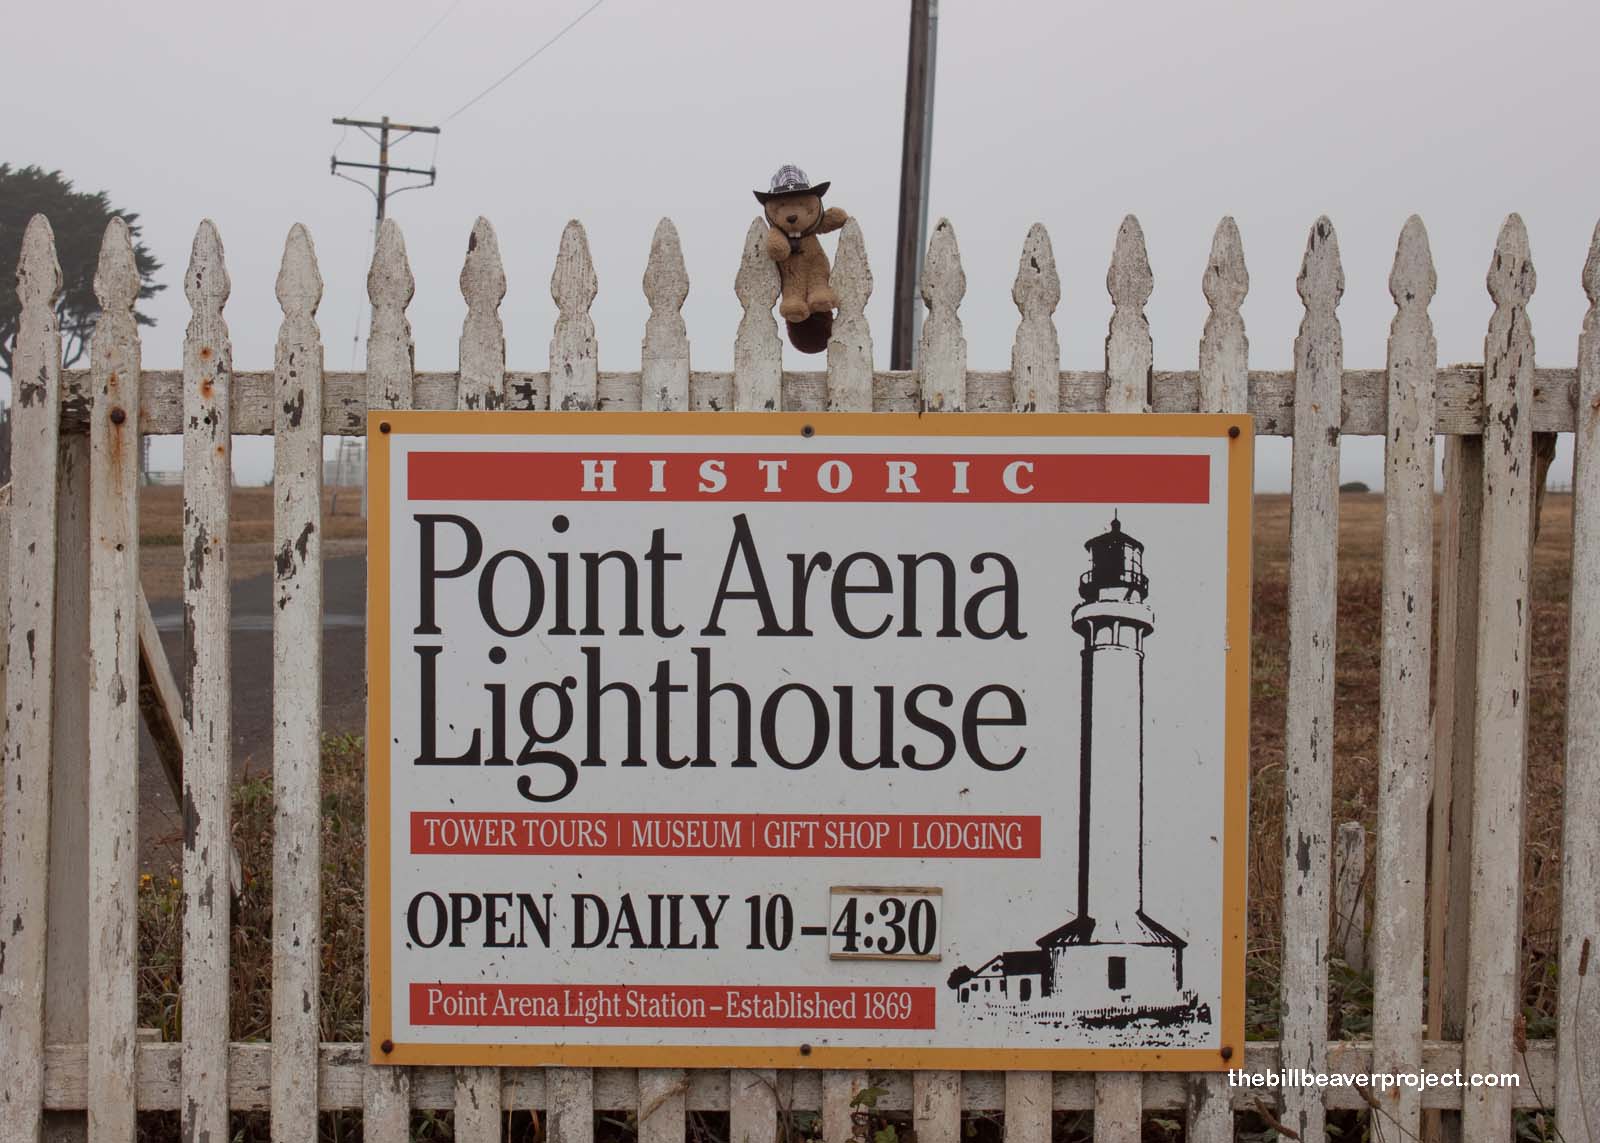 Point Arena Light Station